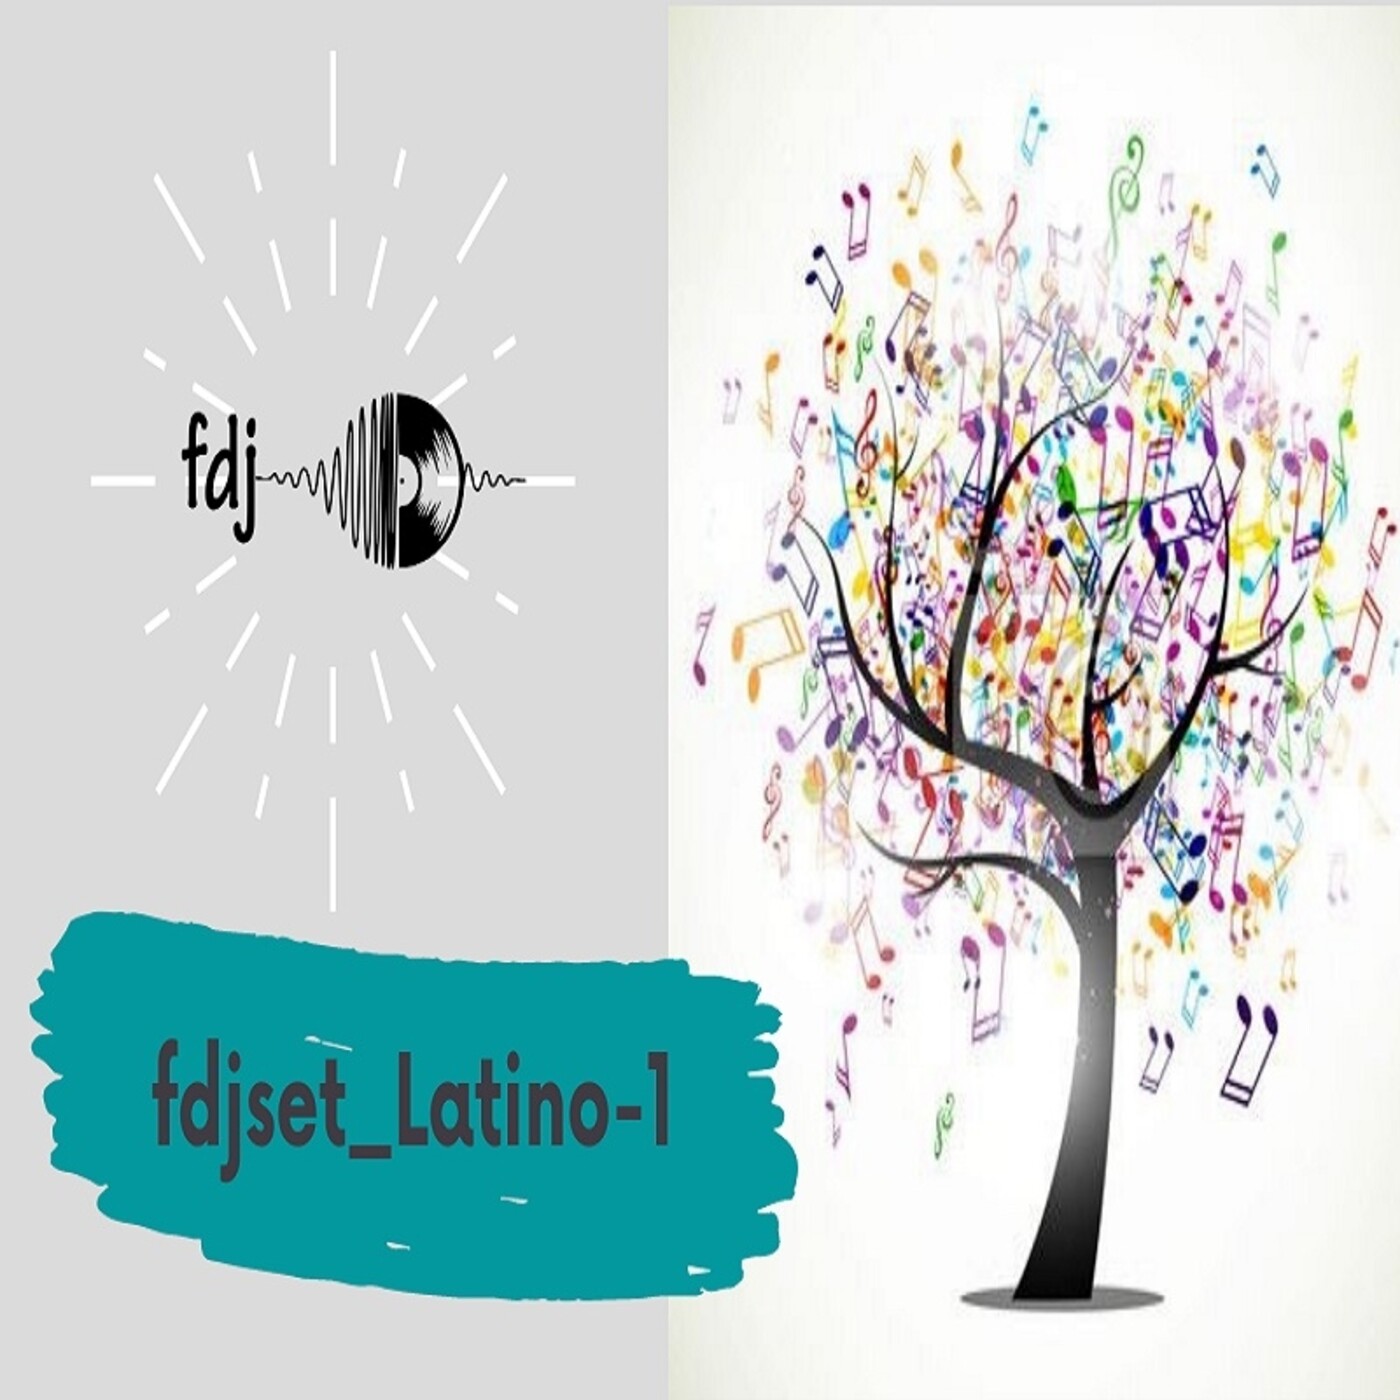 fdjset_Latino-1